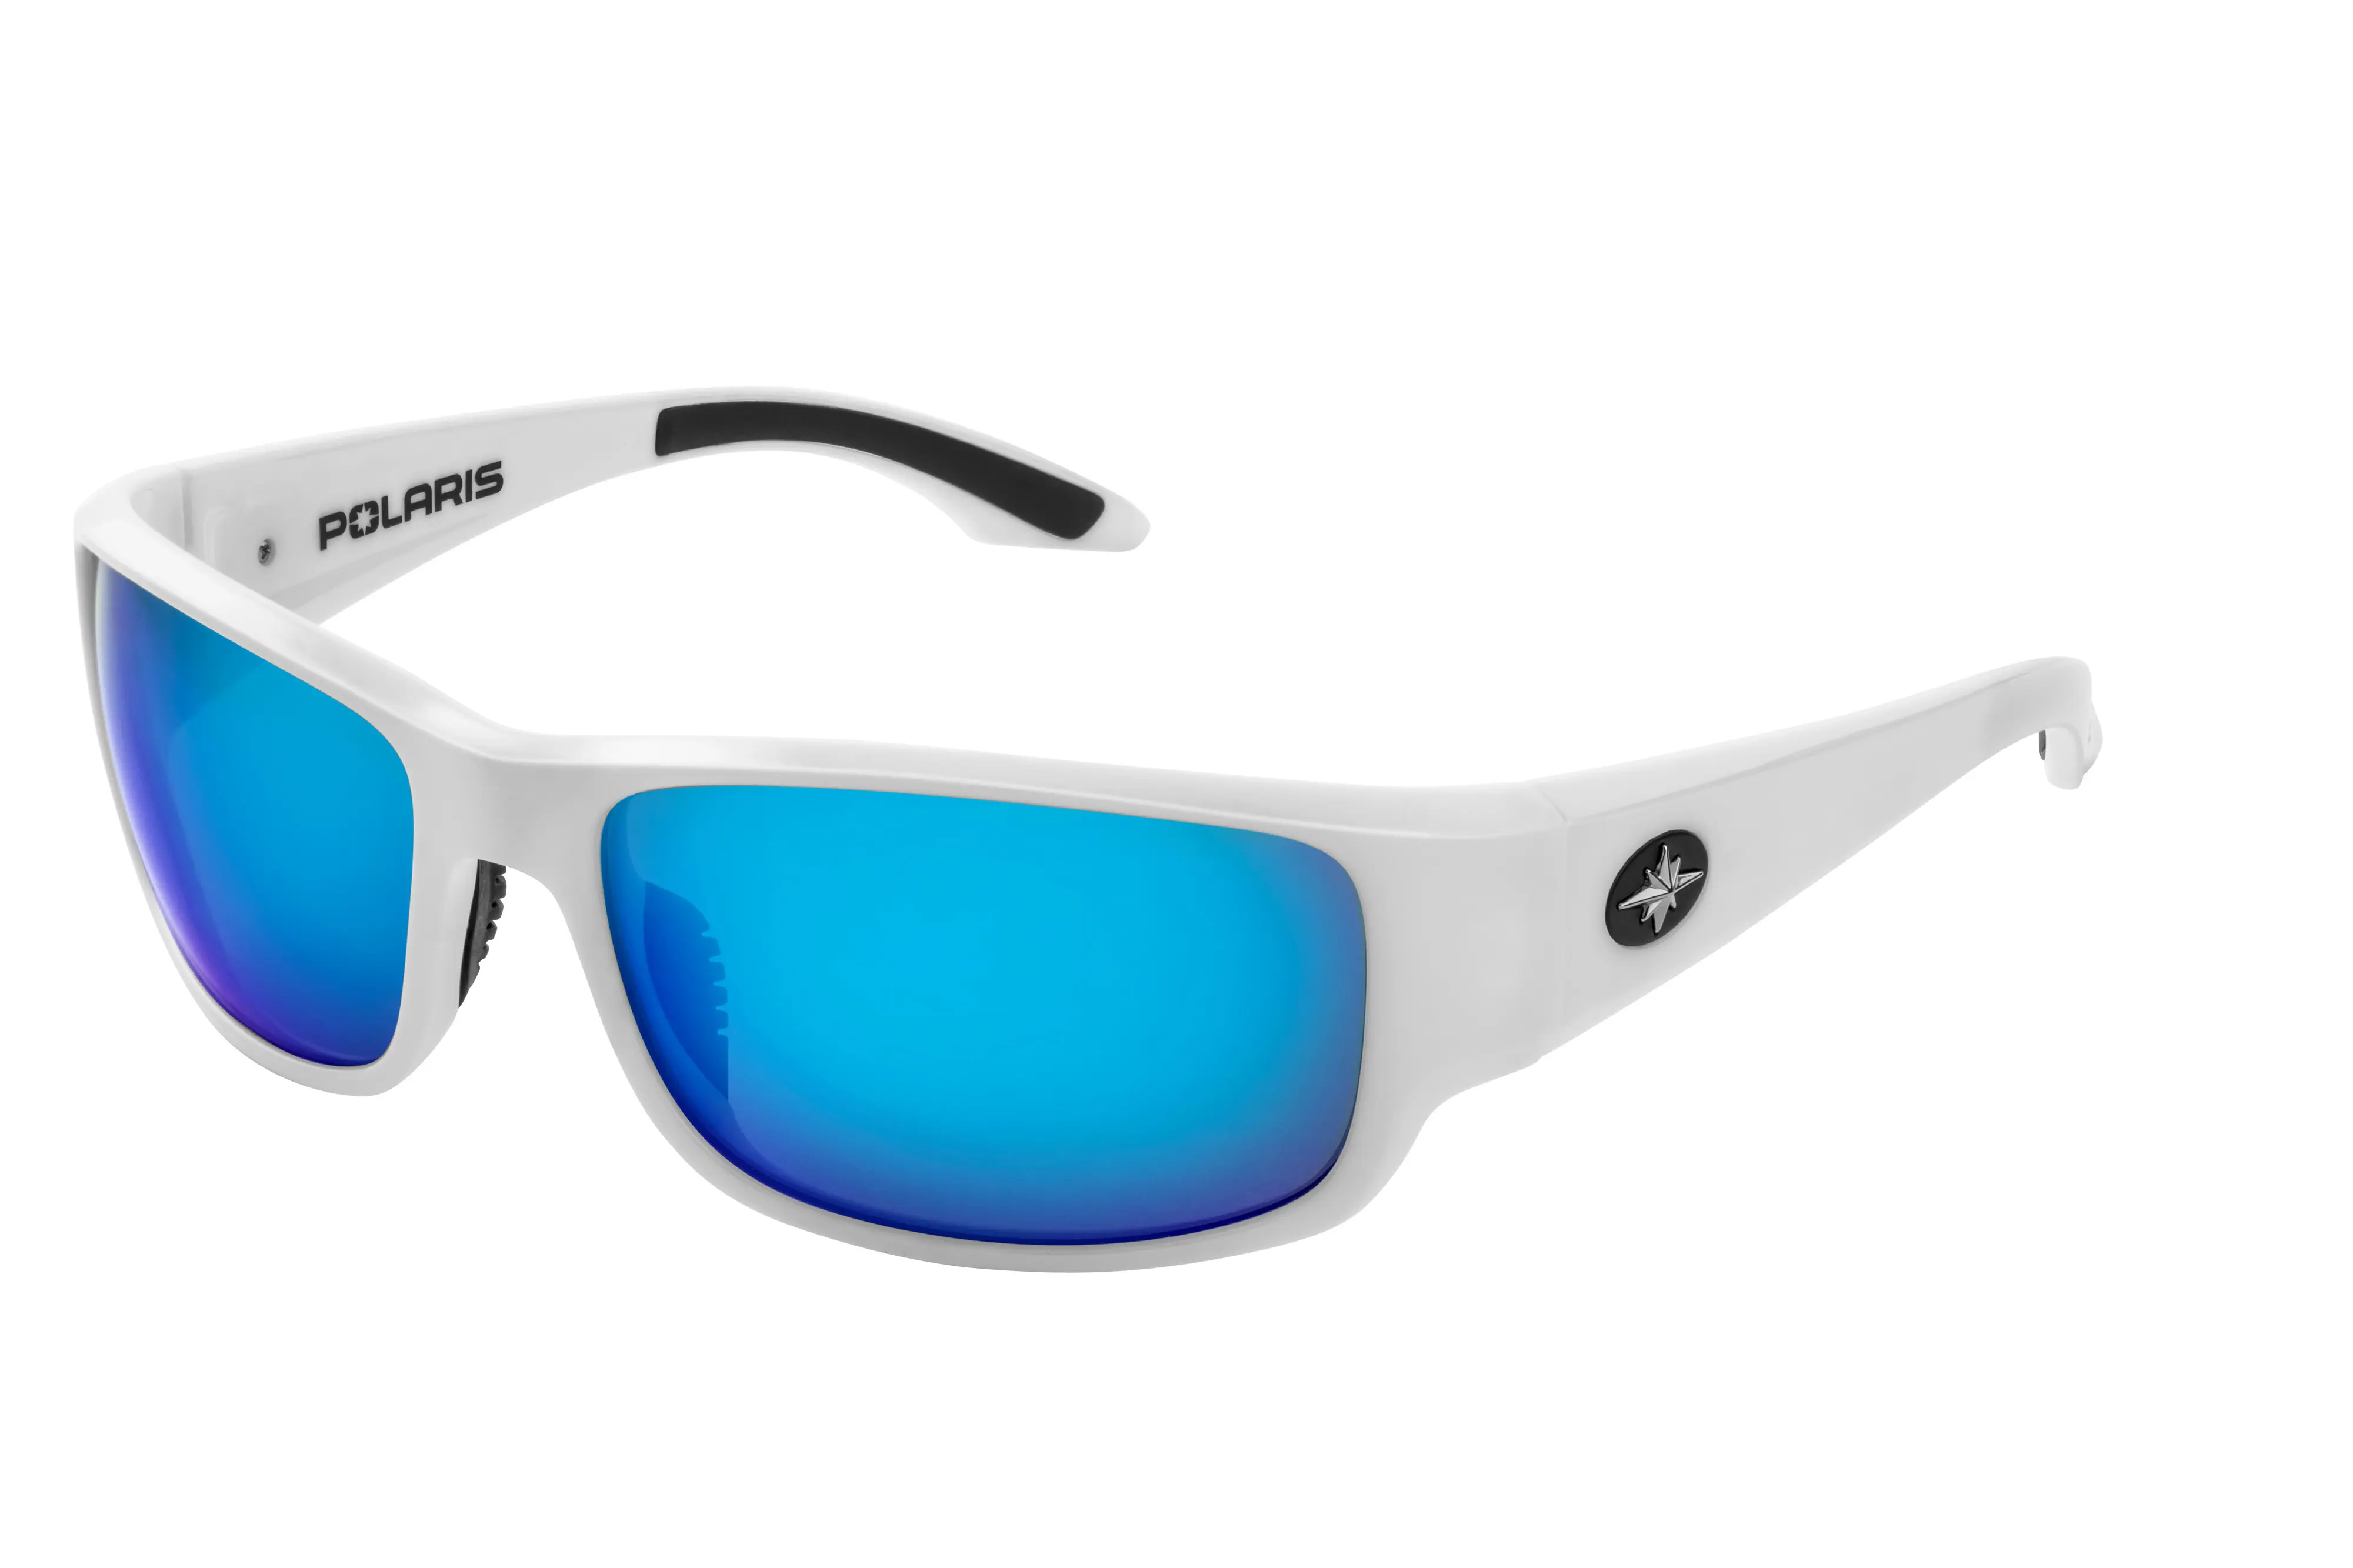 Premium Photo  Isolated of Hiking Sunglasses for Men Terrain Adaptive  Lenses Trivex Nyl on White BG Eyewear Ideas